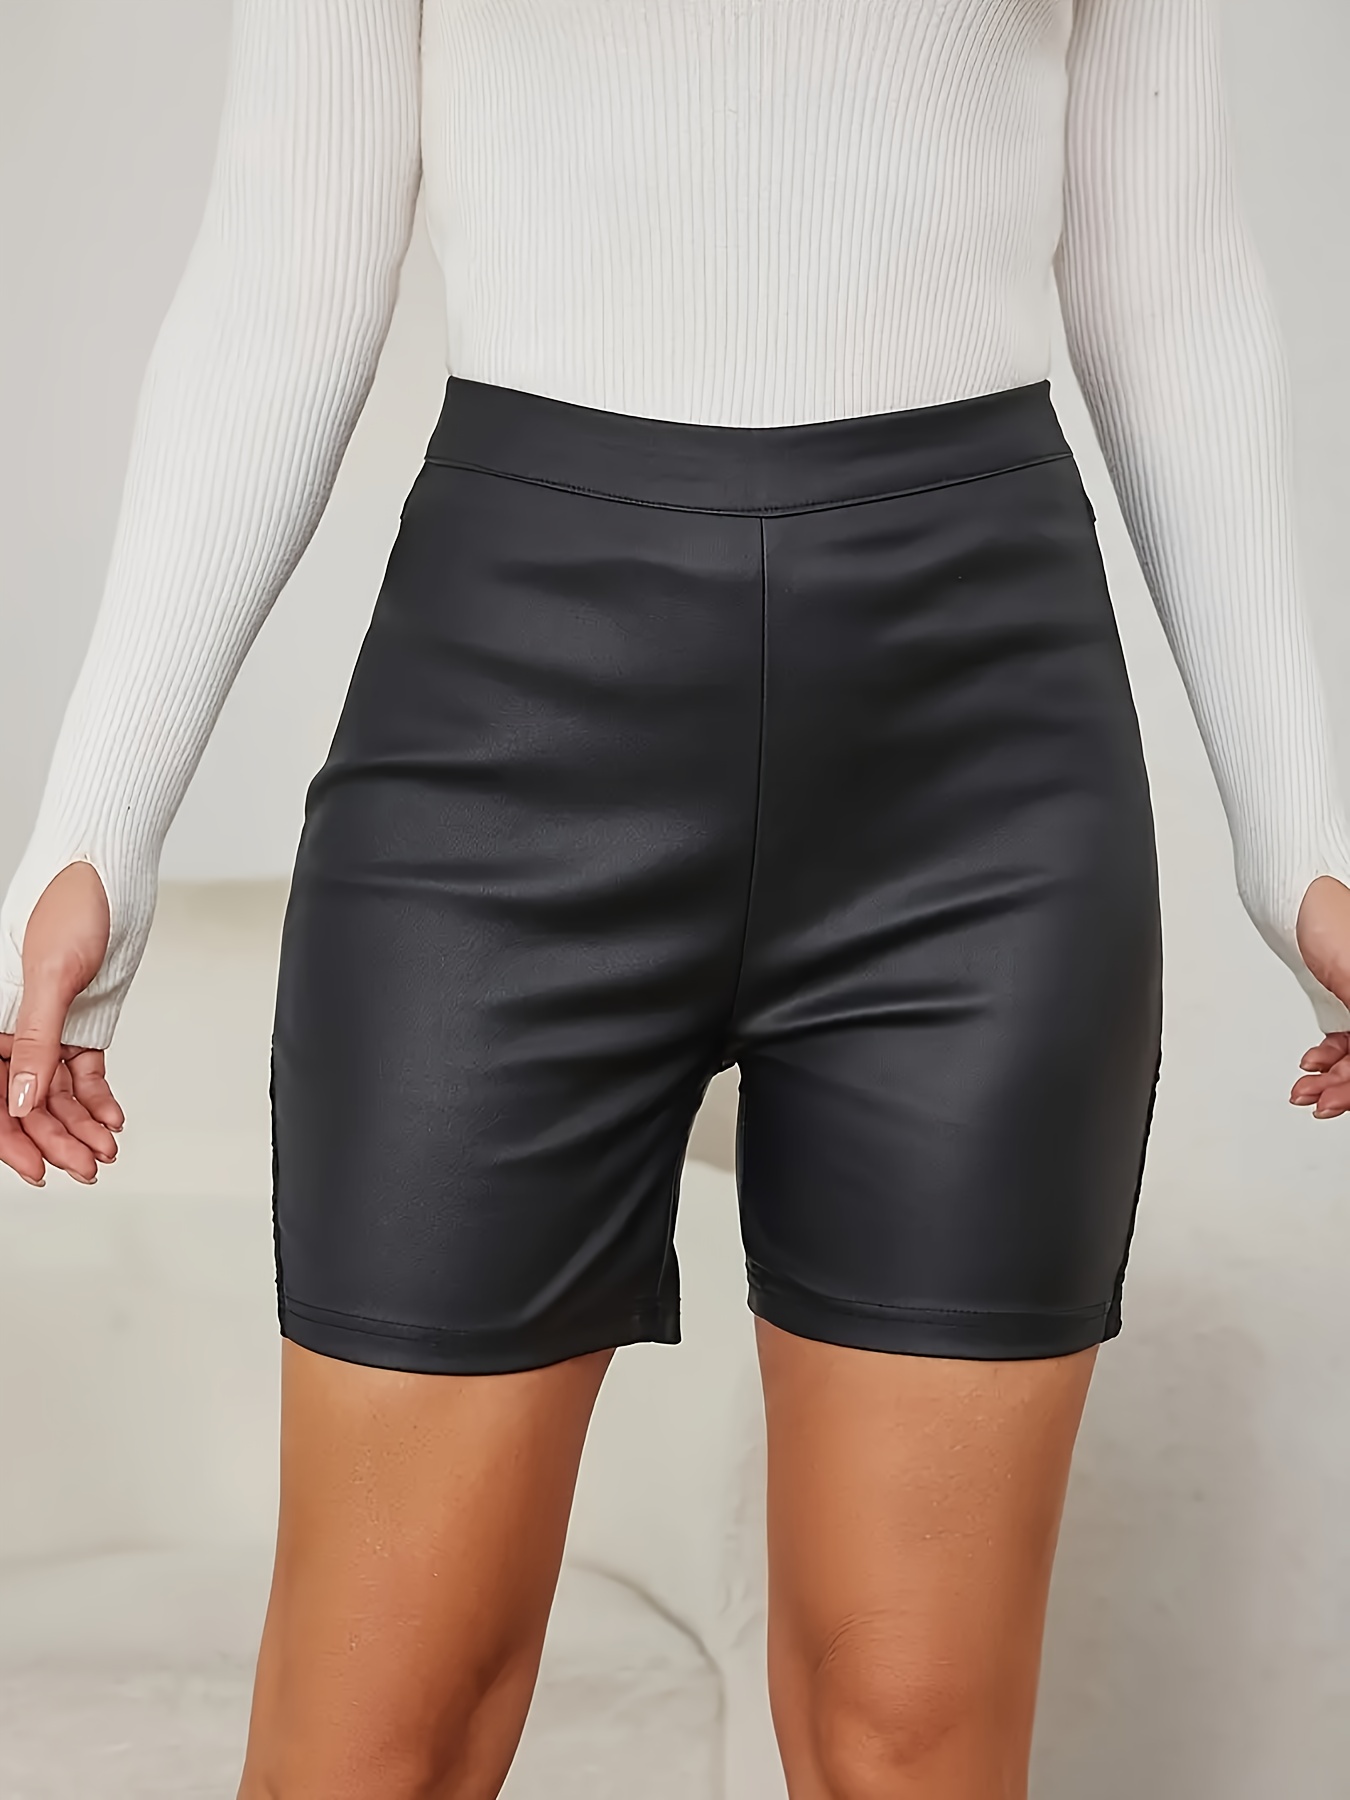 Sexy Solid Mesh Shorts, Skinny Stretchy Sheer High Waist Shorts, Women's  Clothing